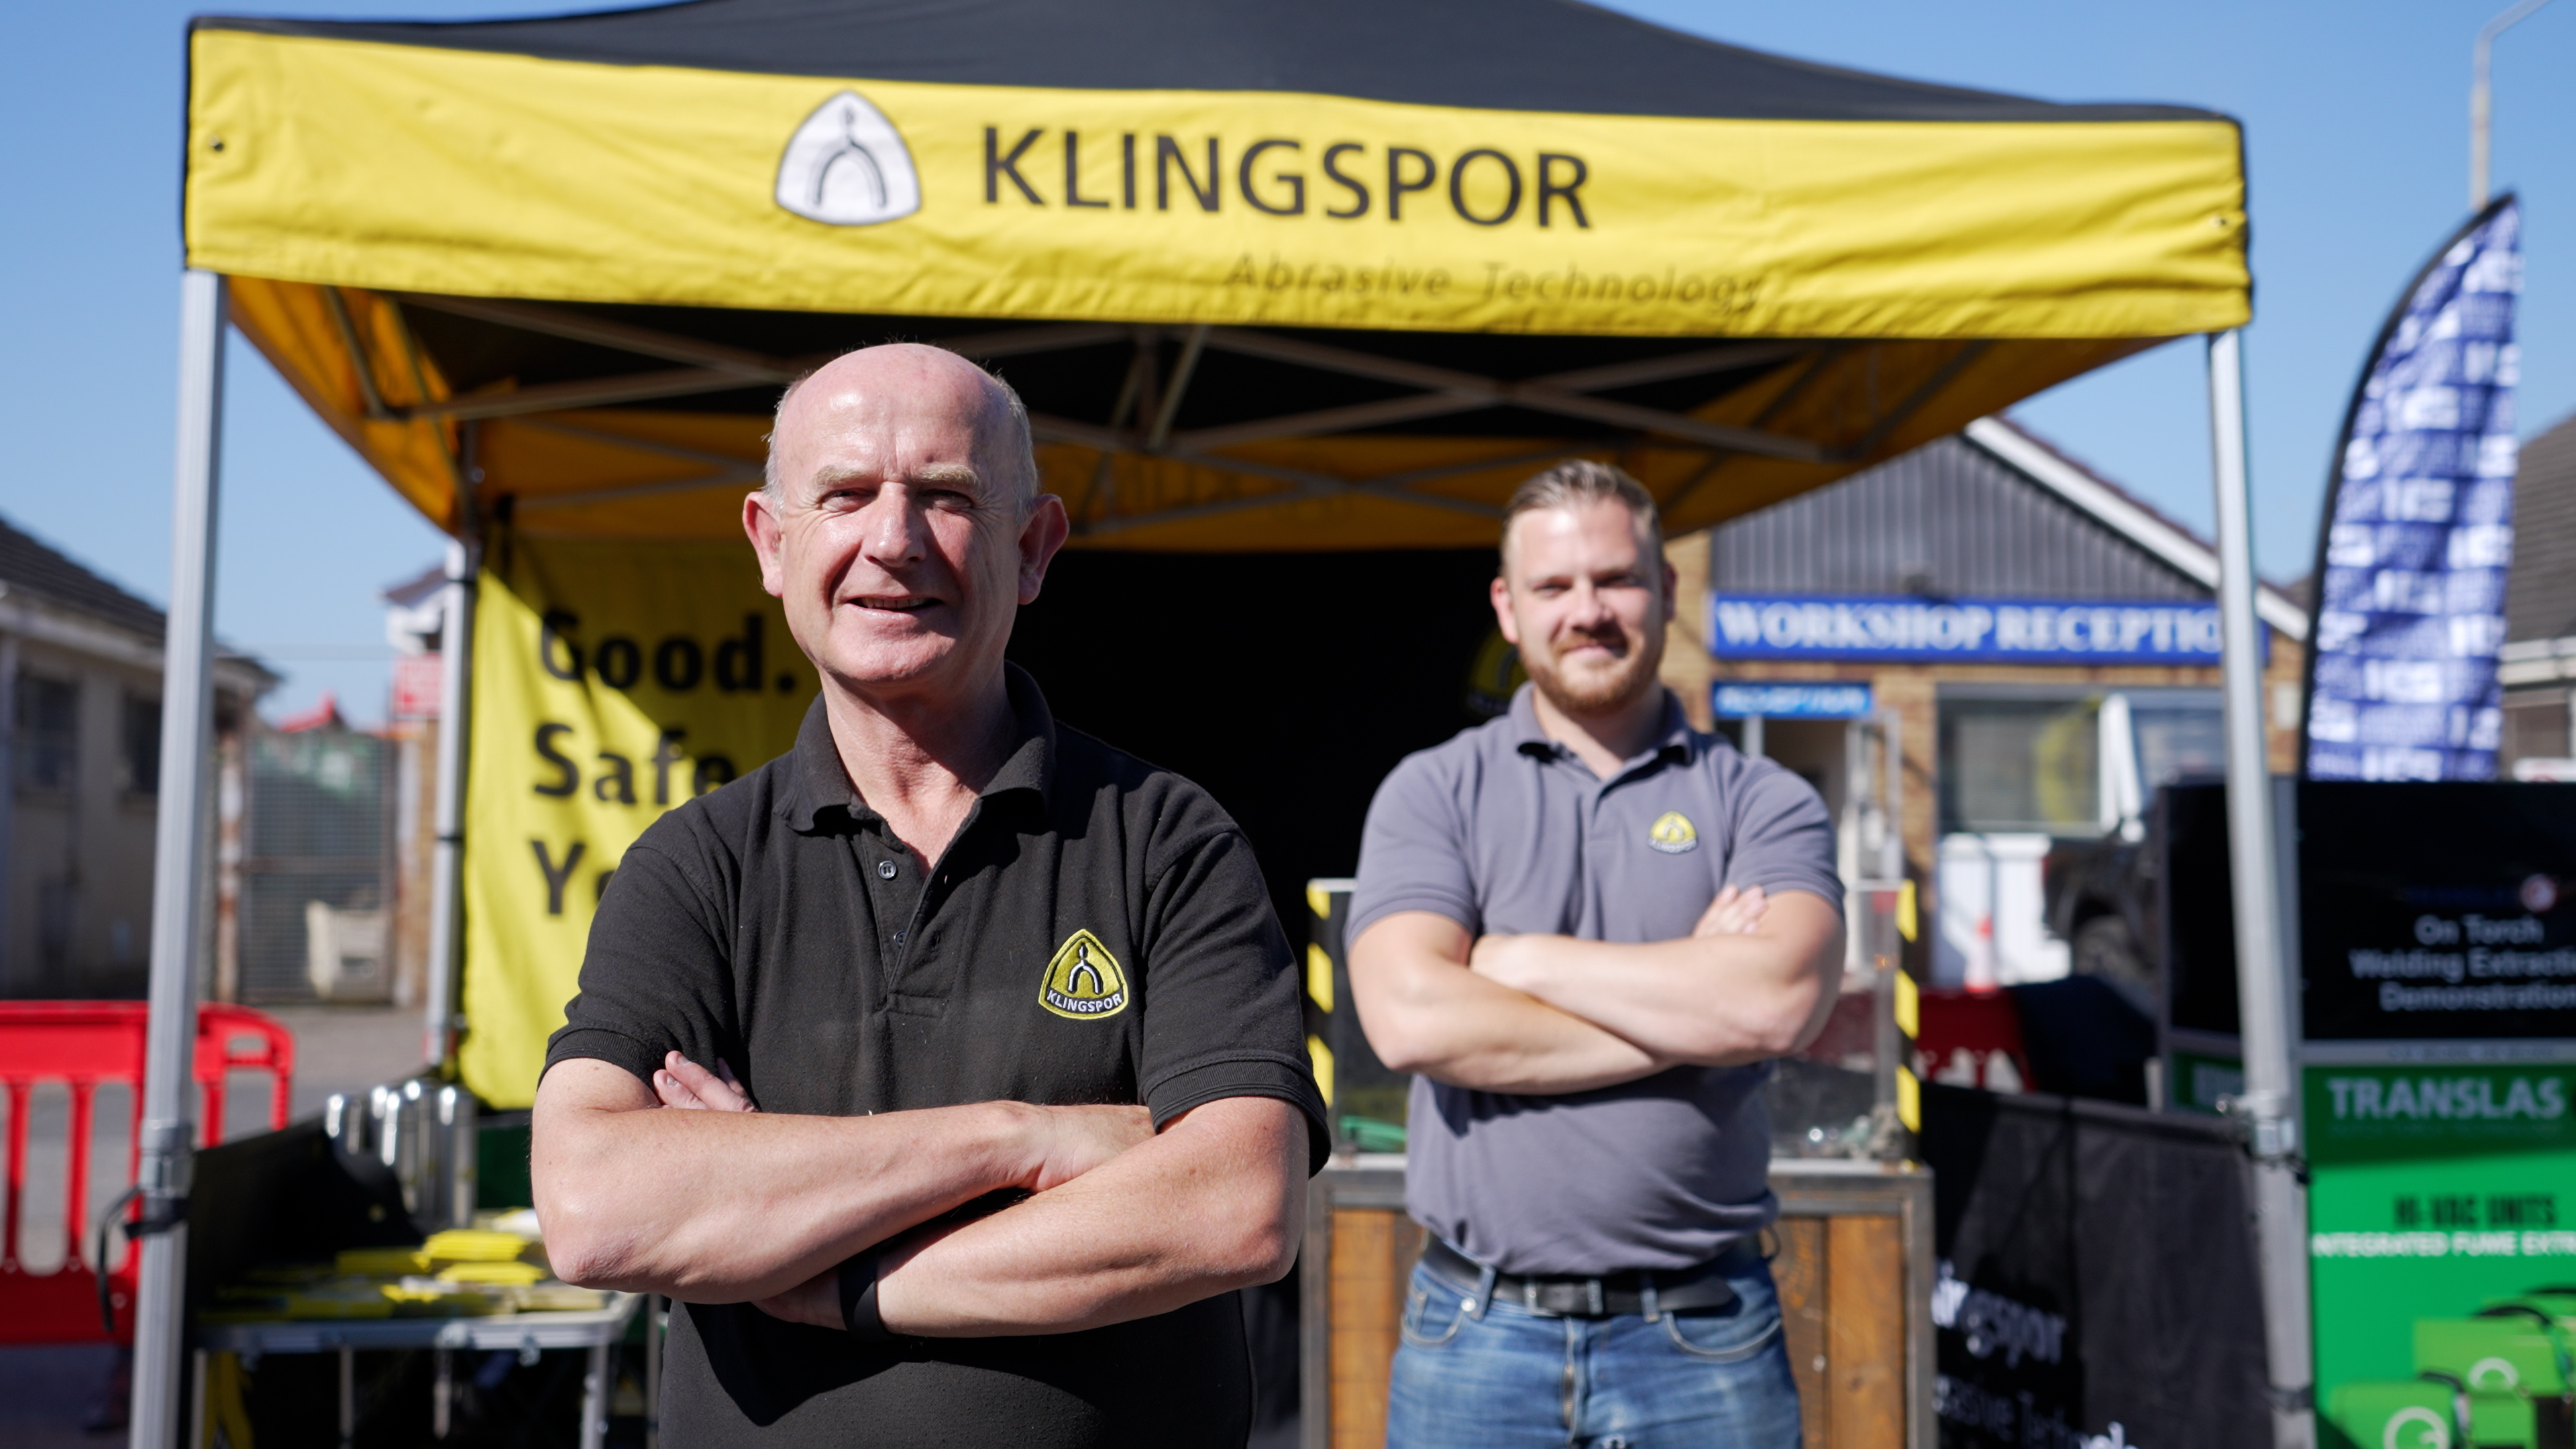 Image of Klingspor booth